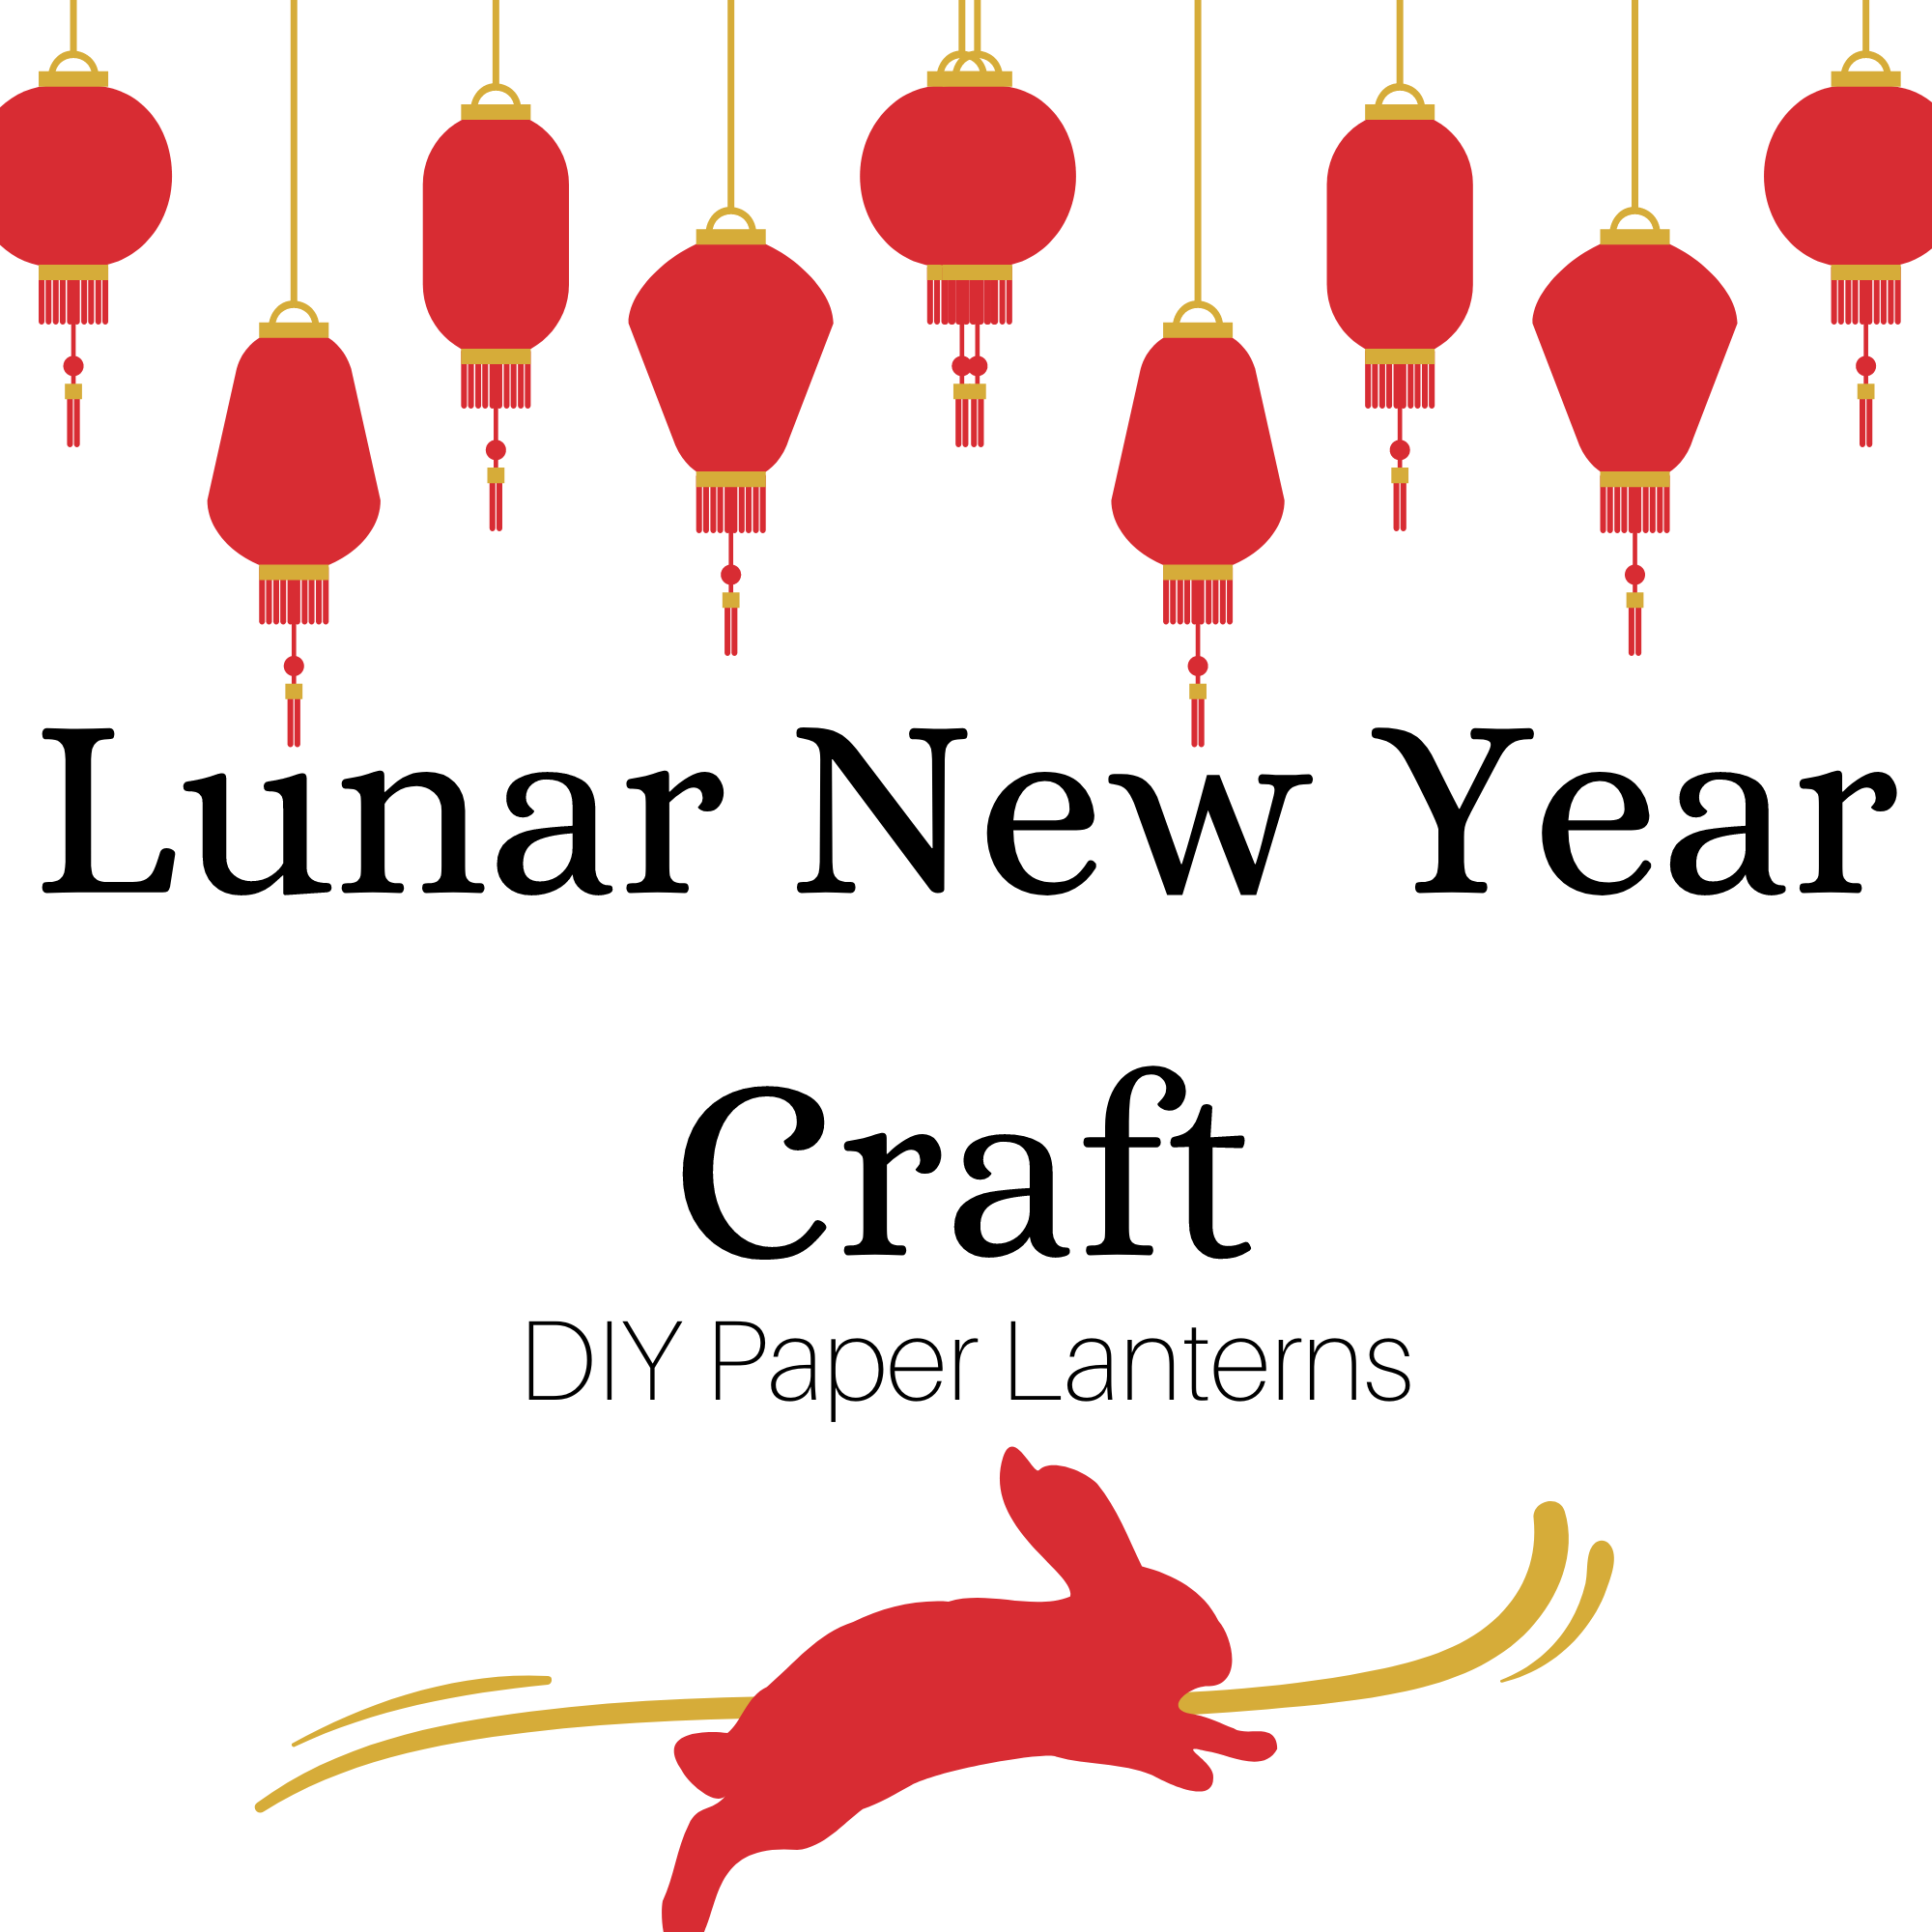 red lanterns and an illustrated rabbit adorn text reading "Lunar New Year Craft: DIY Paper Lanterns"